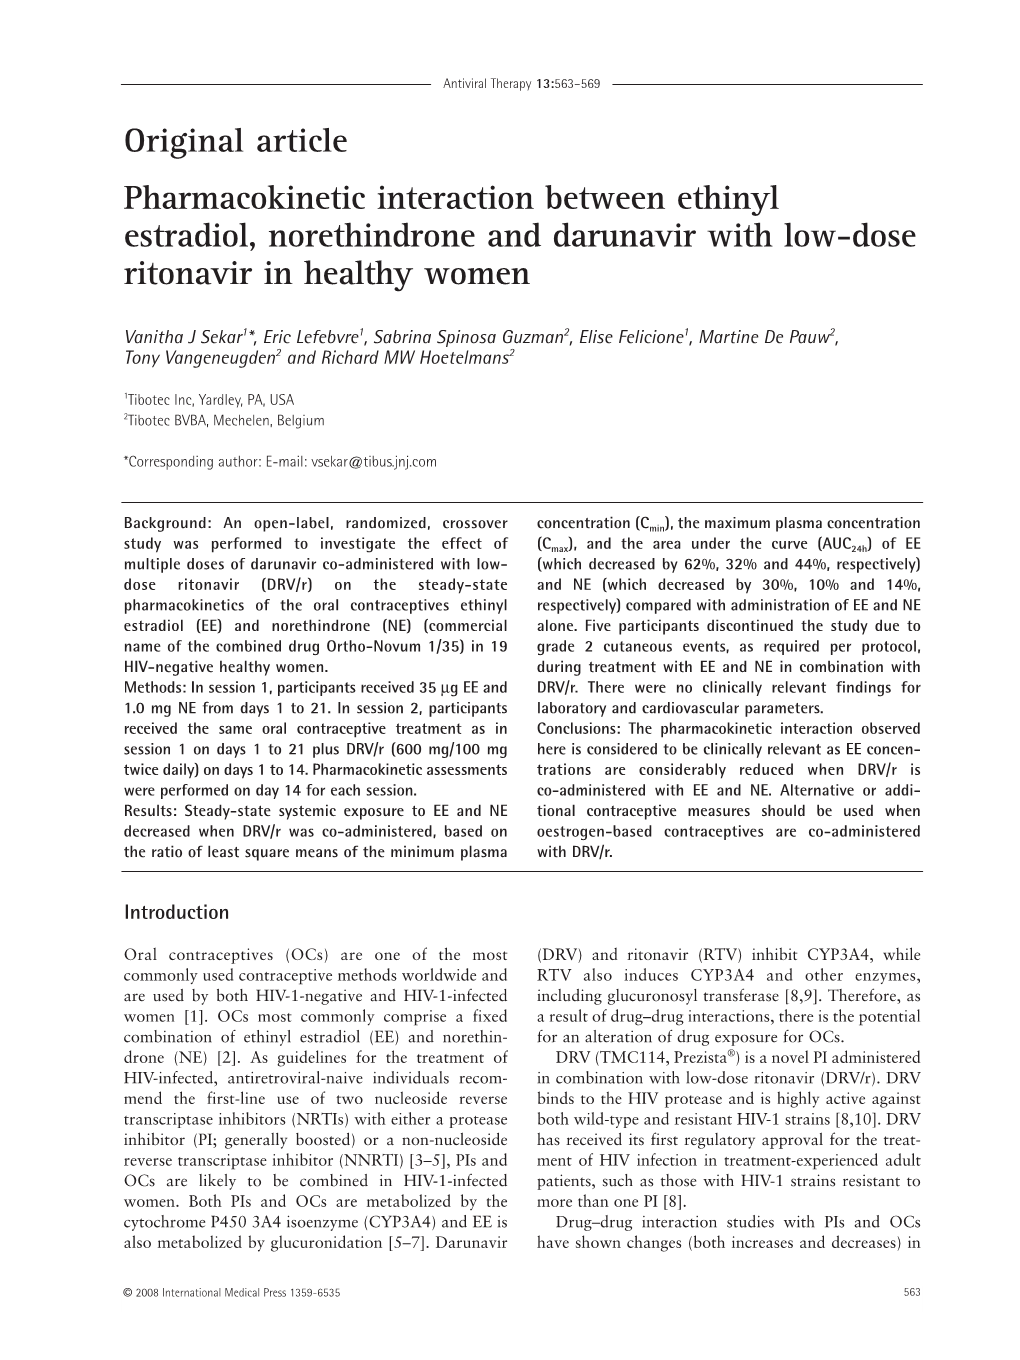 Original Article Pharmacokinetic Interaction Between Ethinyl Estradiol, Norethindrone and Darunavir with Low-Dose Ritonavir in Healthy Women